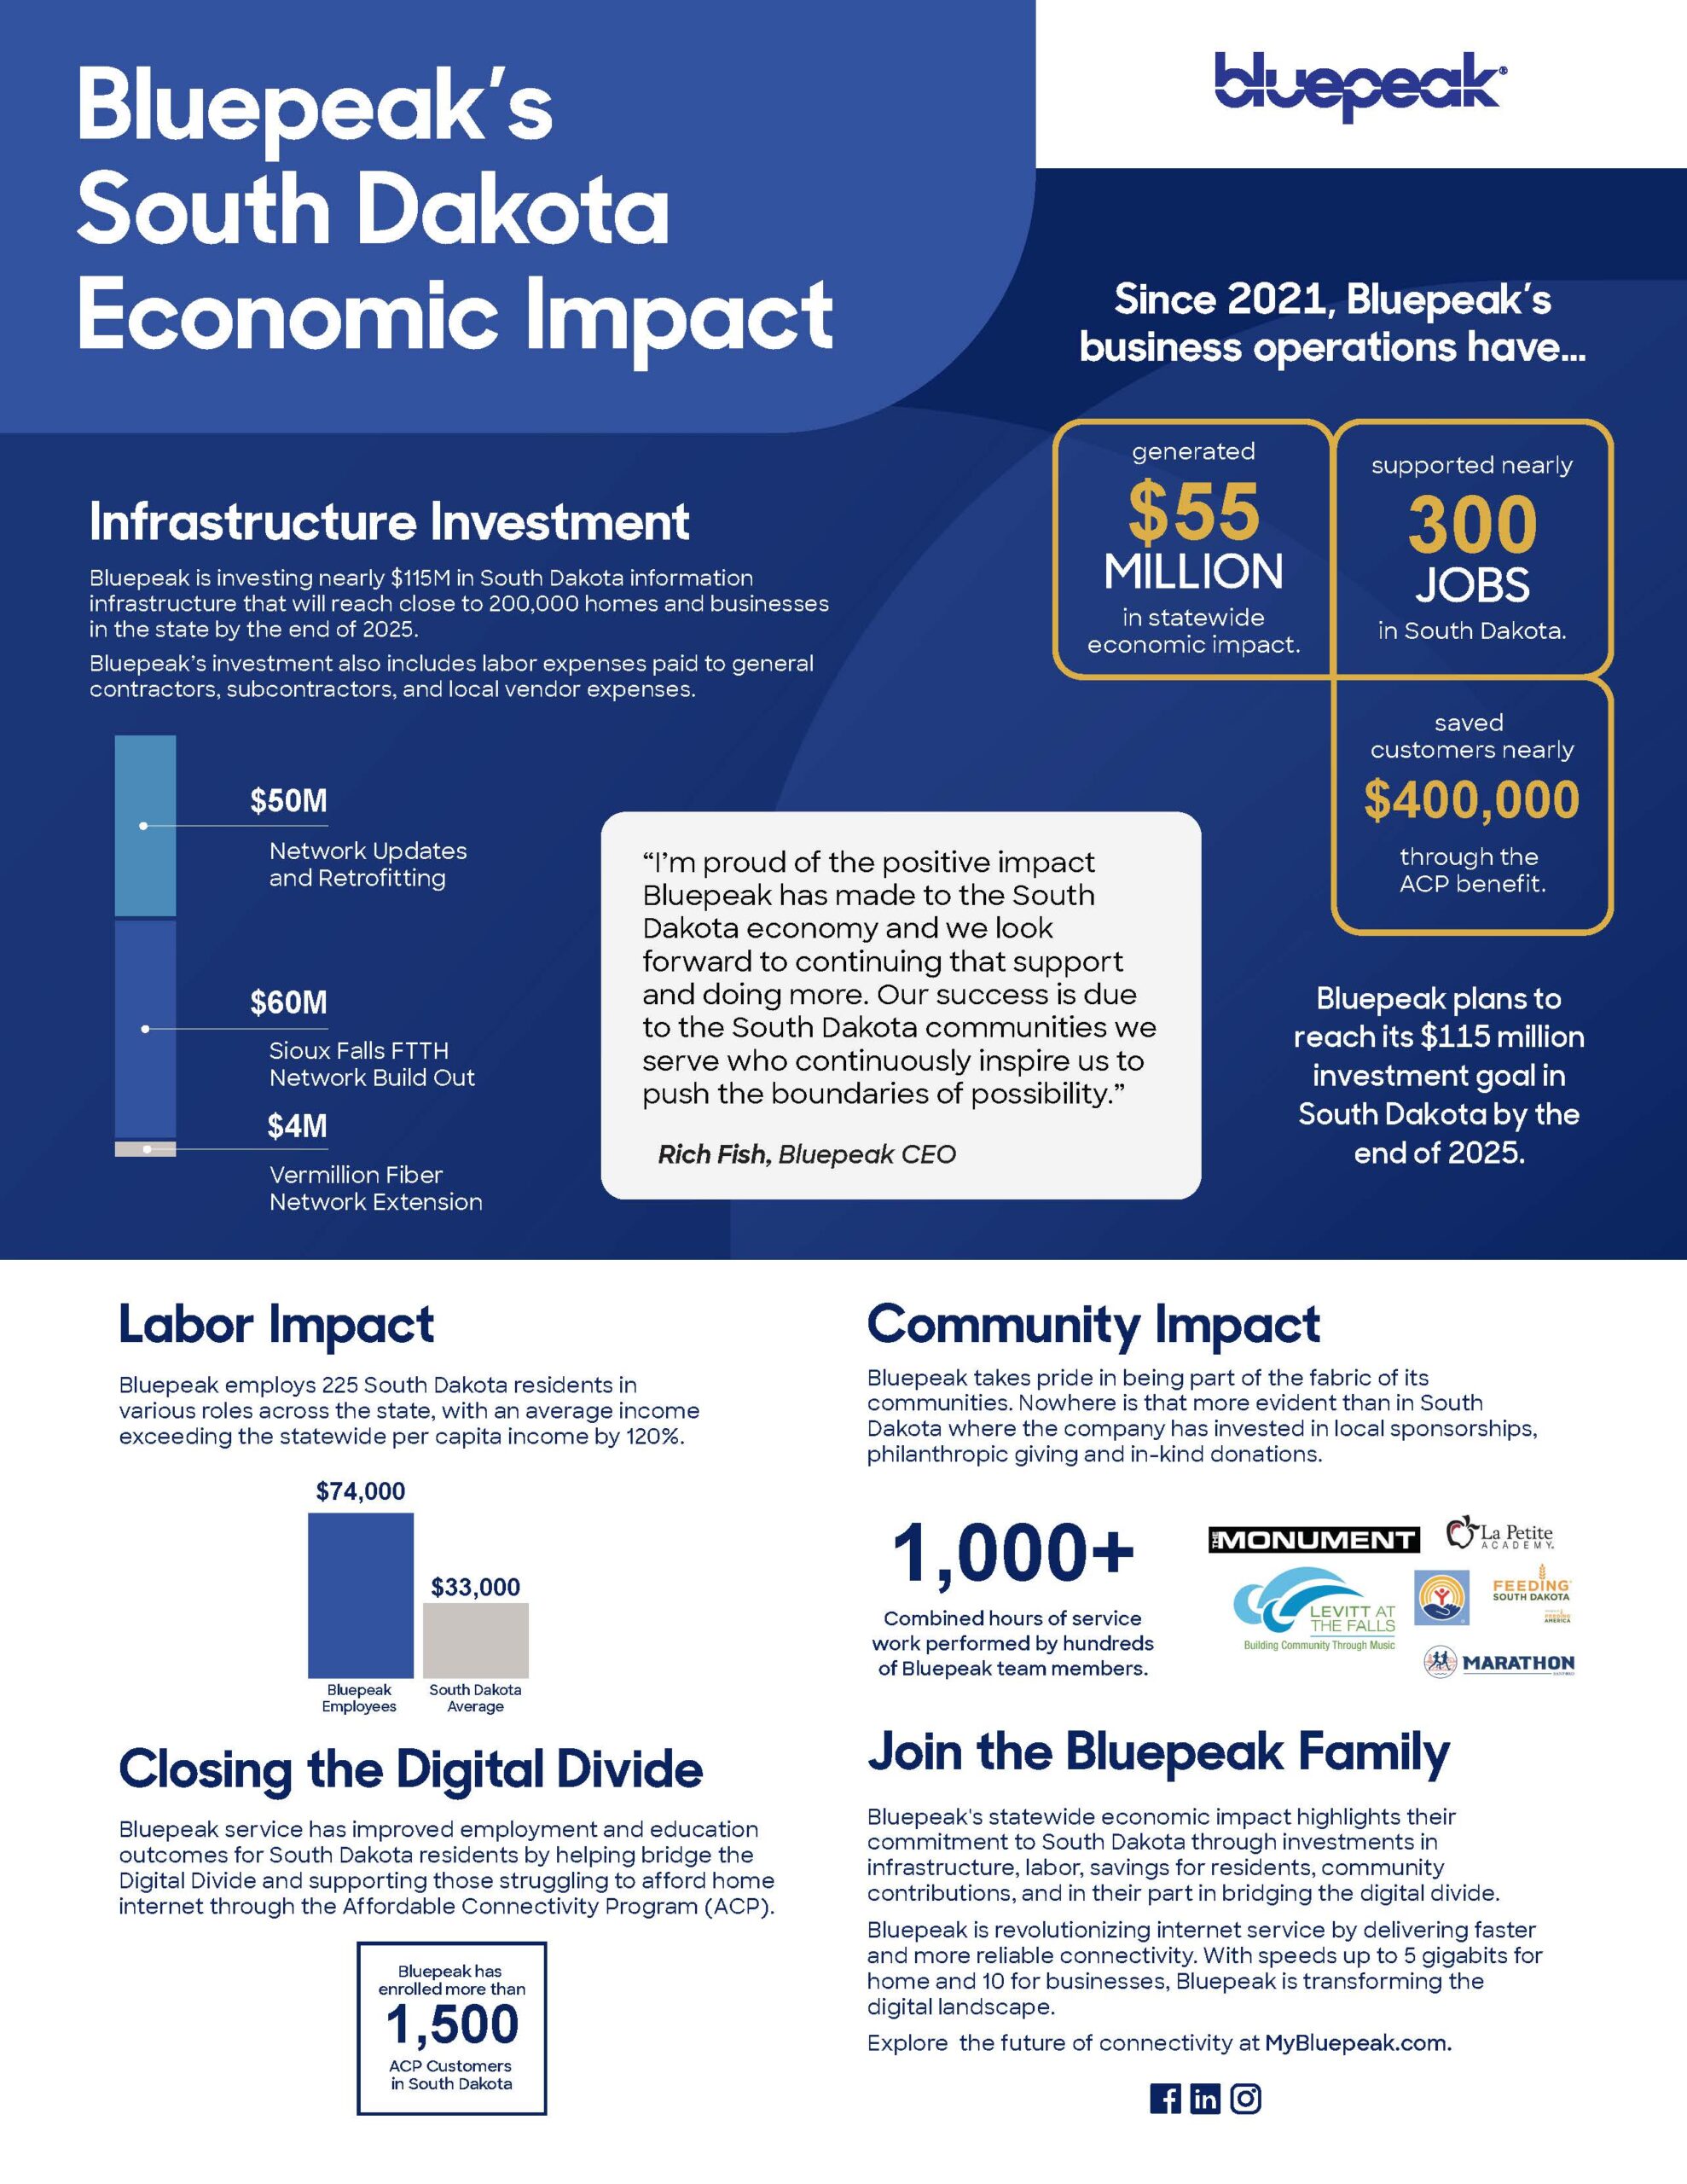 Infographic detailing Bluepeak's investment in South Dakota.